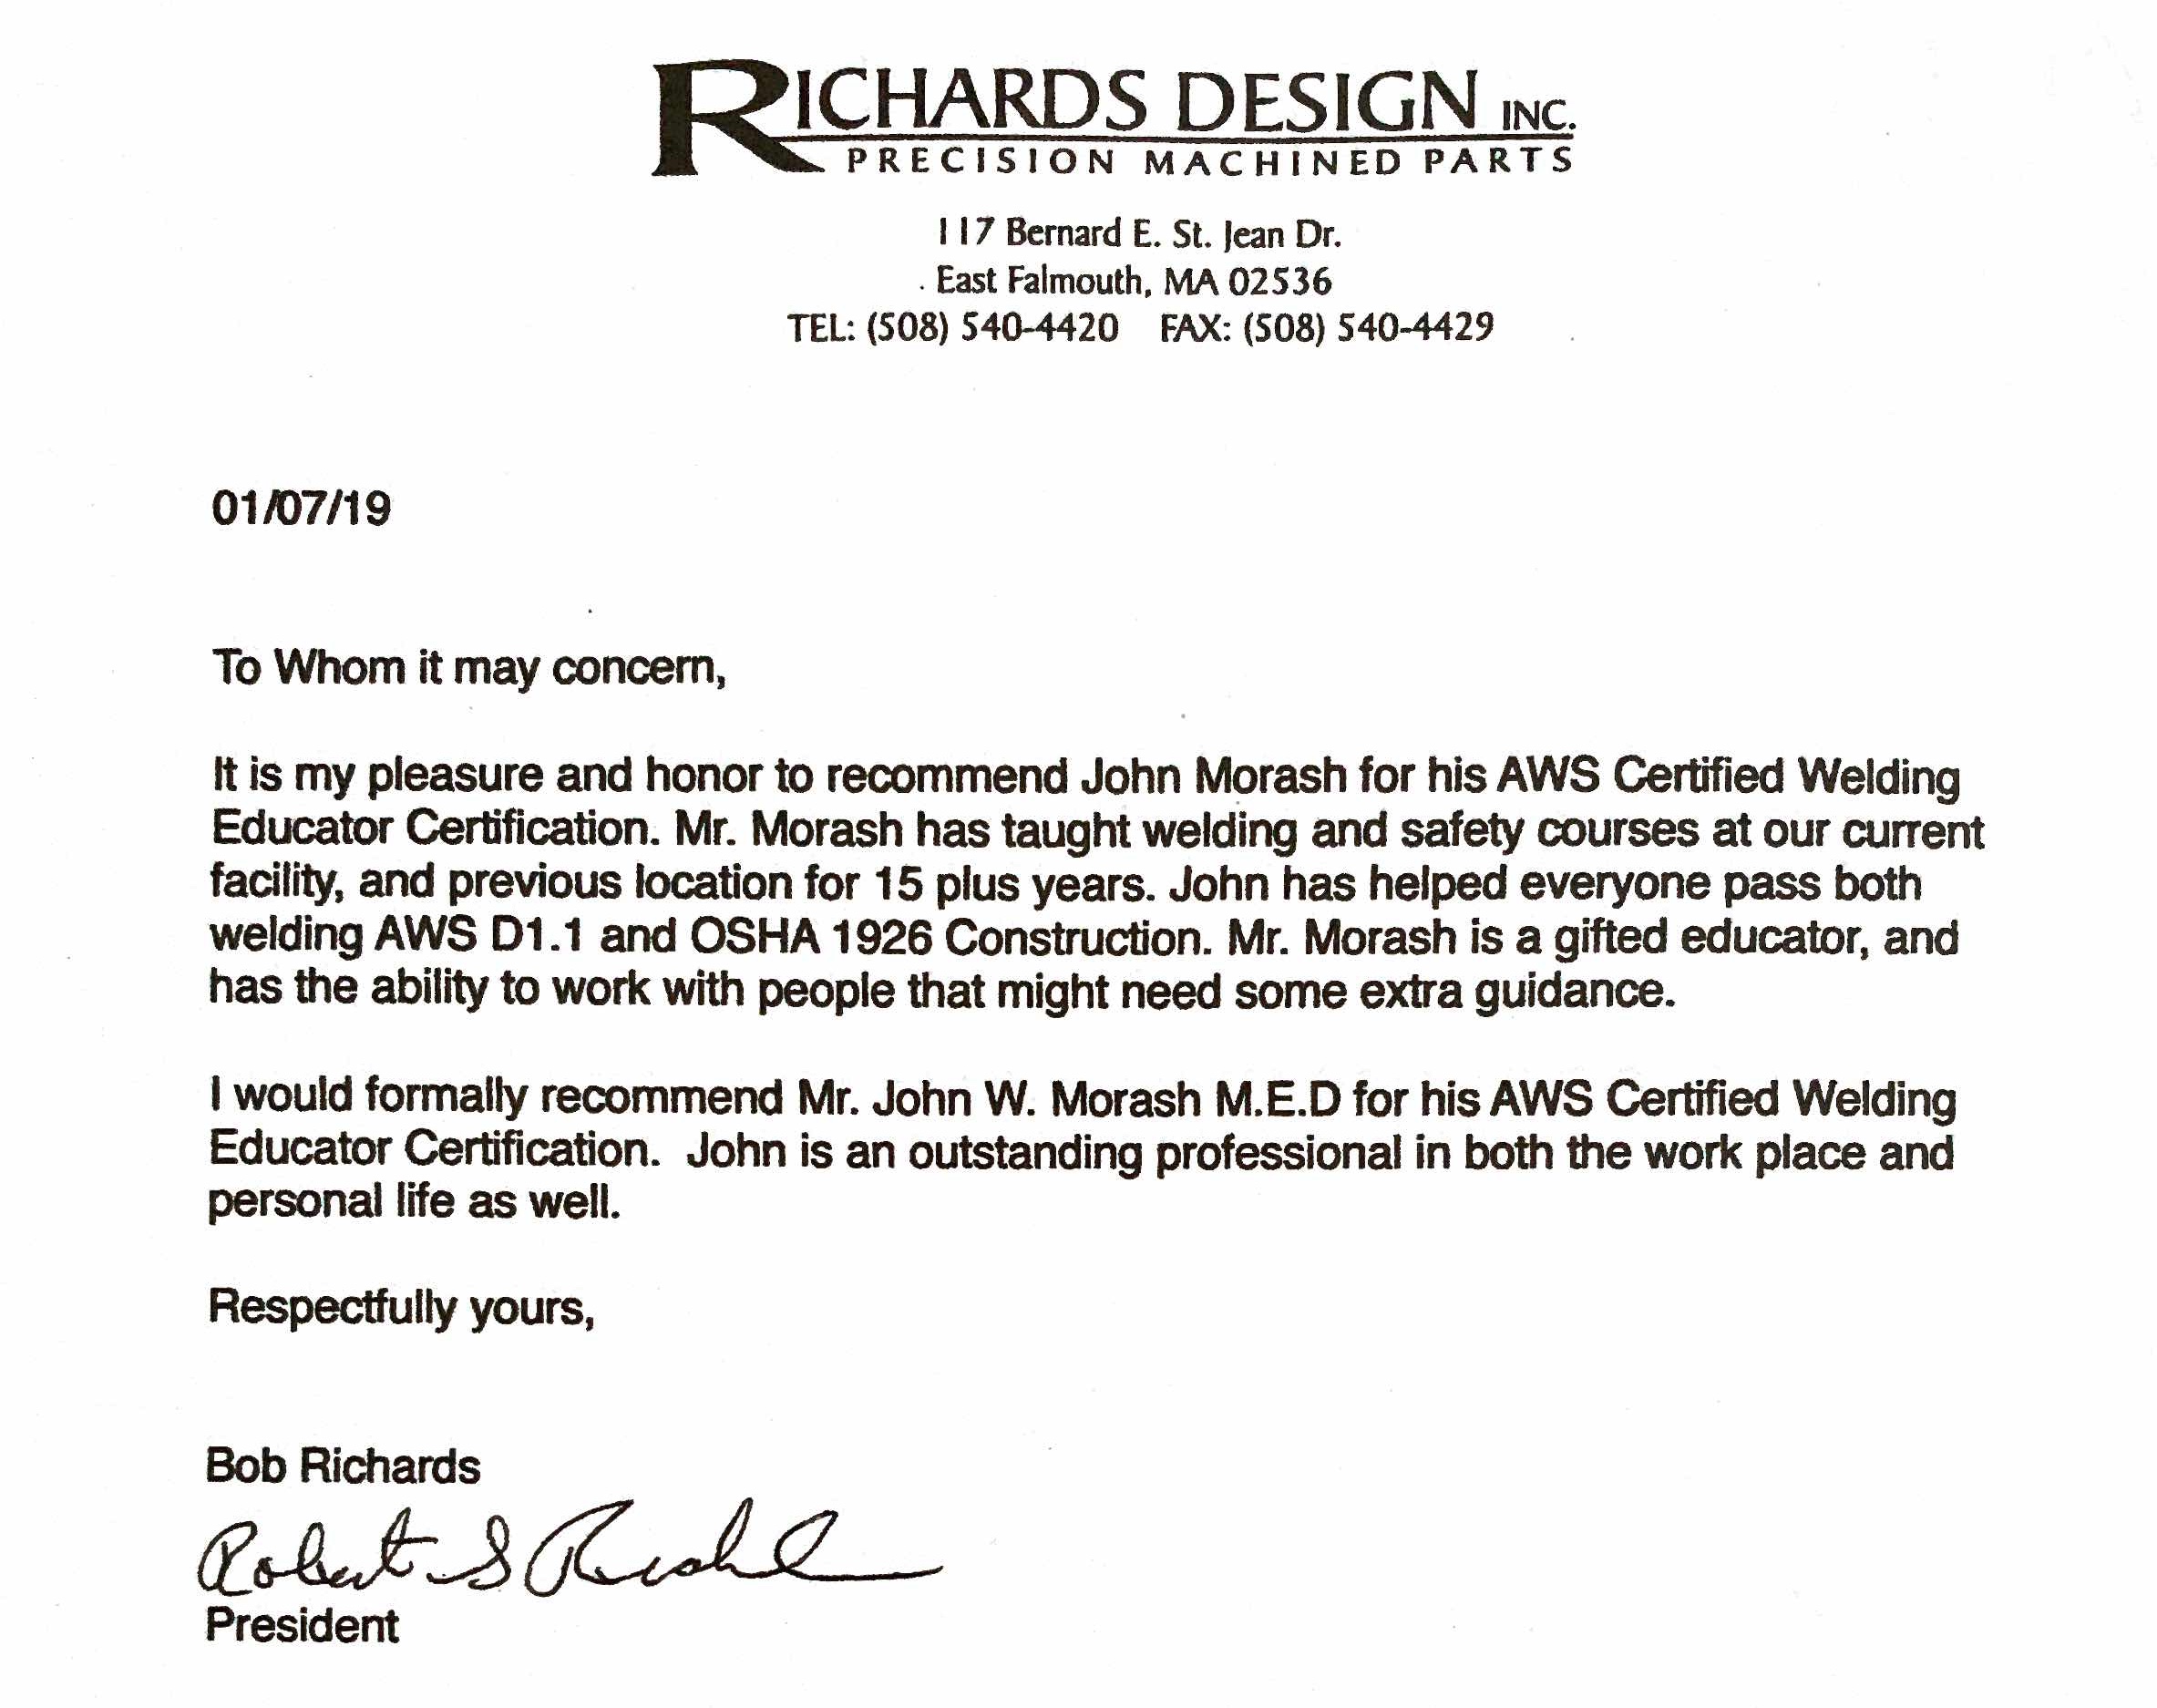 Richards Design Inc Testimonial